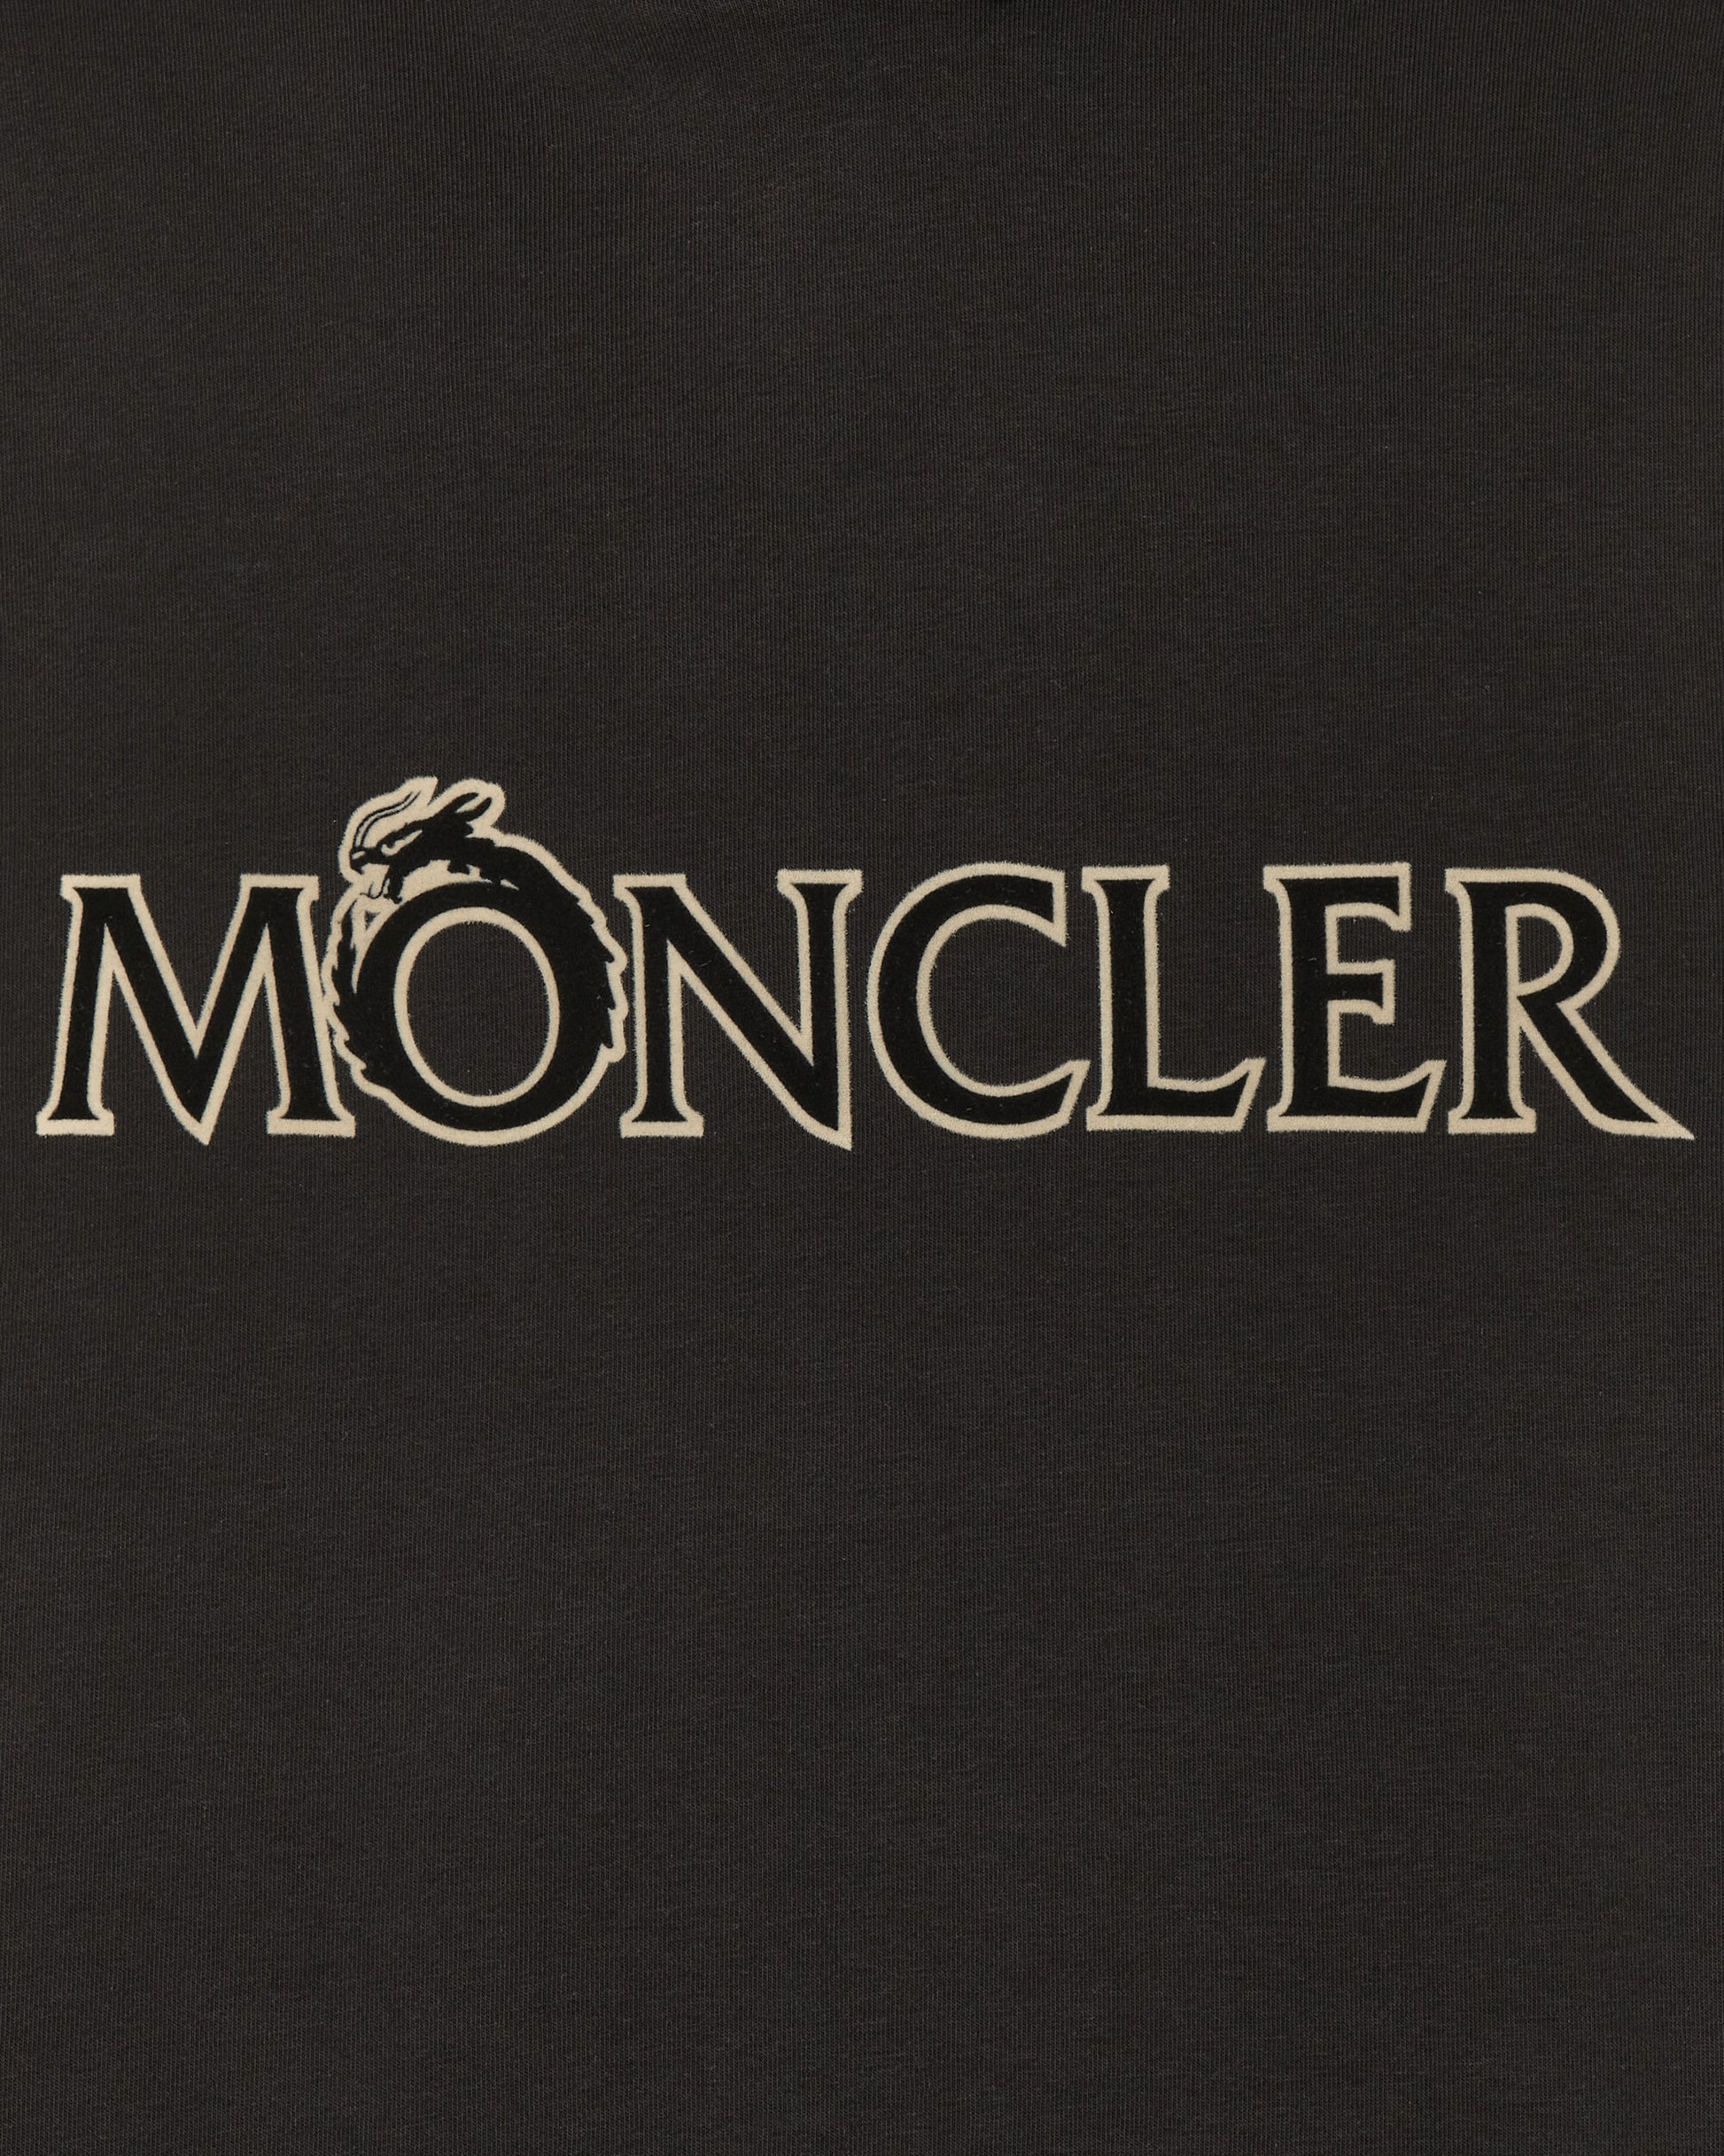 Moncler Hoodie Sweater Chinese New Year Black Sweatshirts Hoodies 8G00025899RB 999